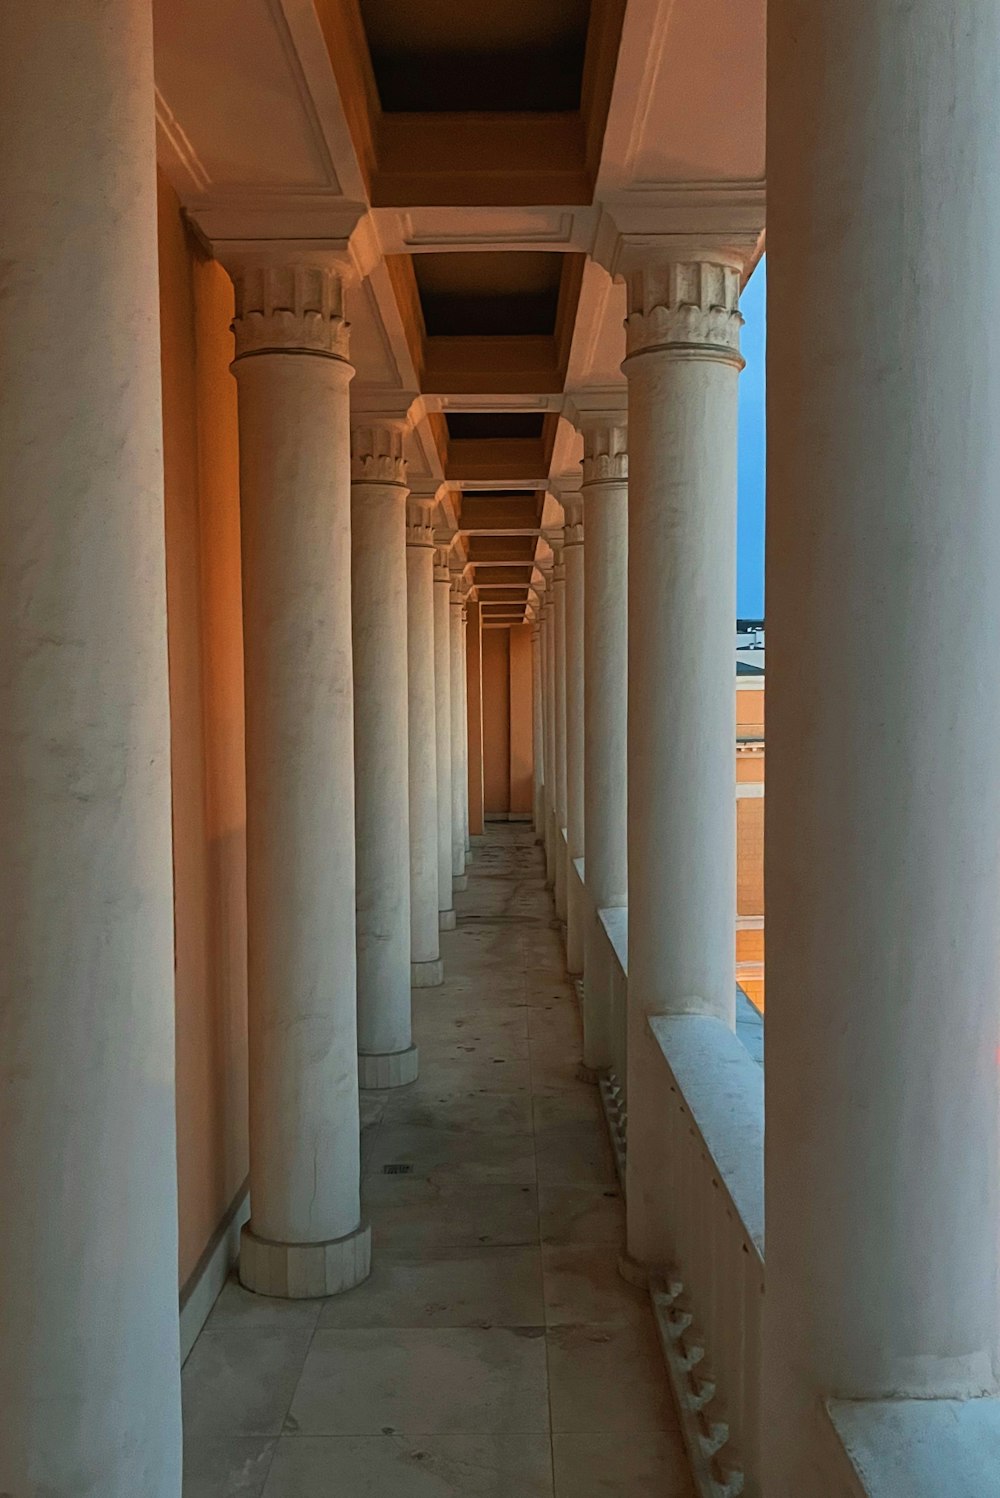 a hallway with pillars